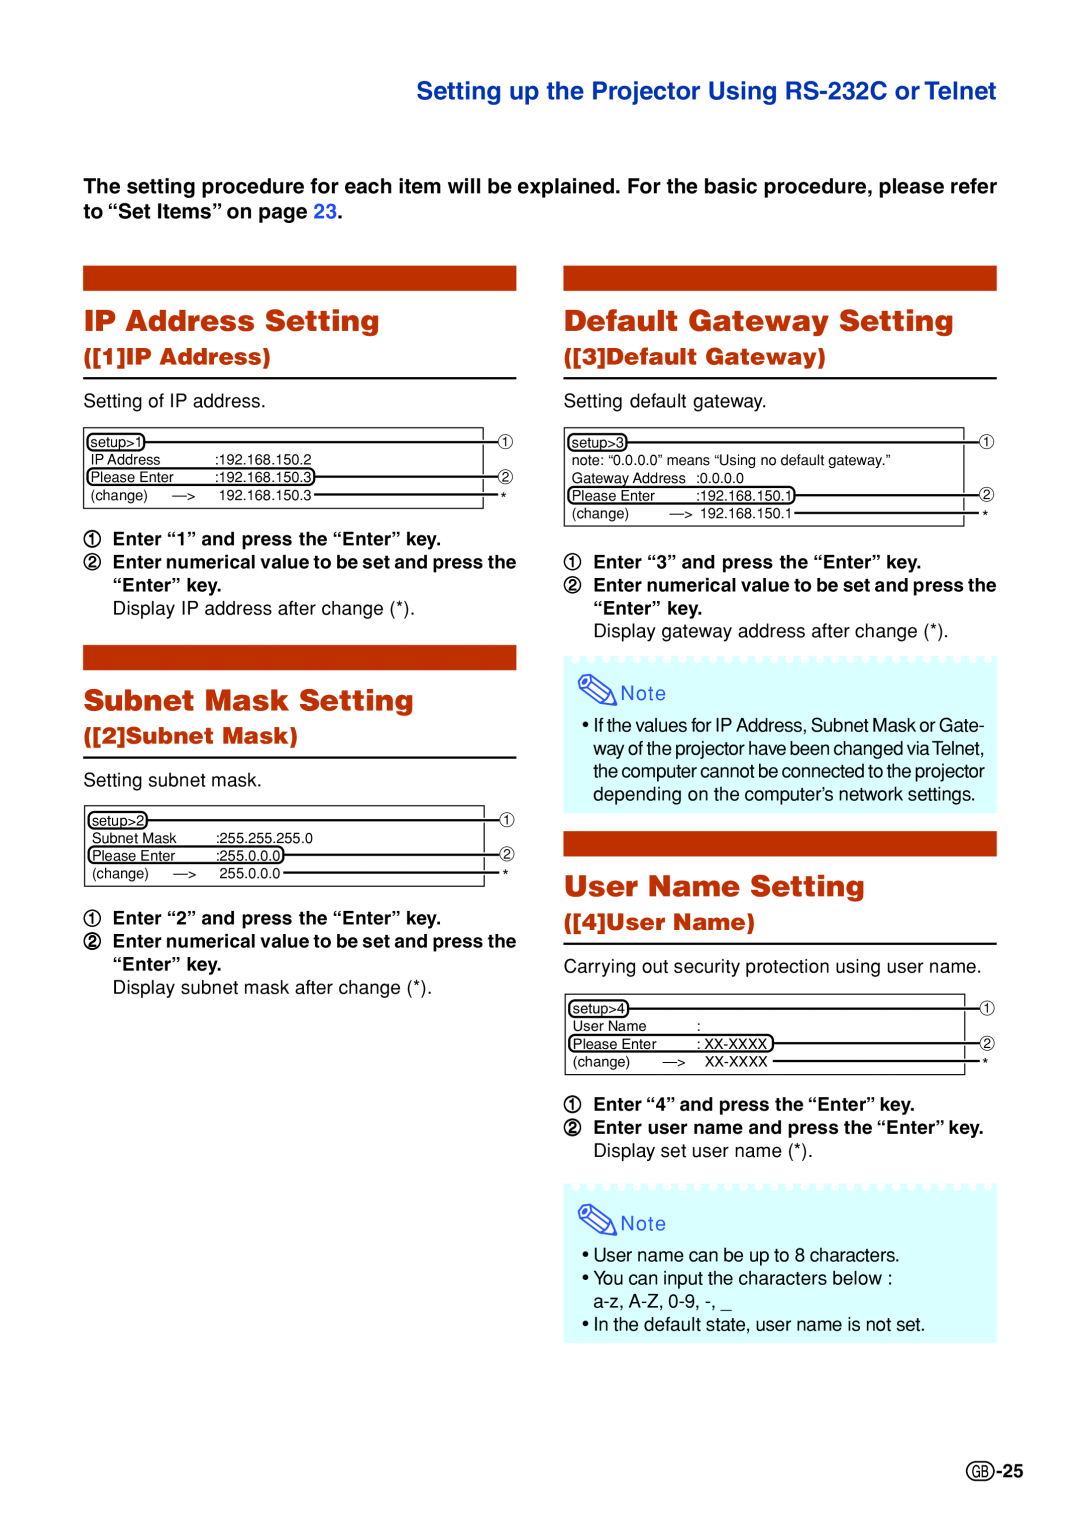 Sharp PG-F325W IP Address Setting, Default Gateway Setting, Subnet Mask Setting, User Name Setting, 1IP Address 